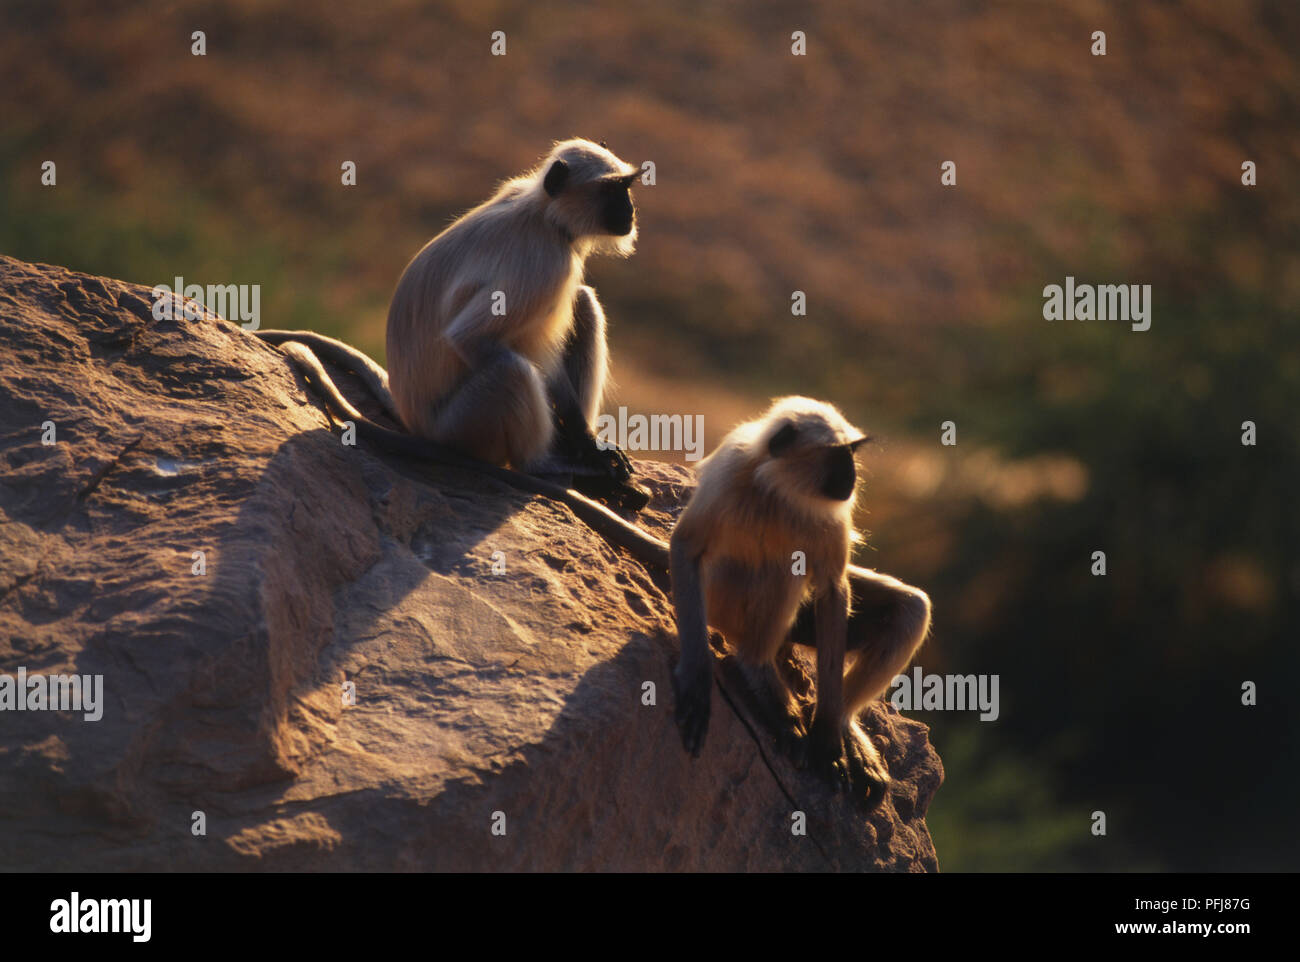 Dos Langurs o monos Hanuman (Semnopithecus entellus) sentado sobre una roca con vistas valle, vista lateral. Foto de stock